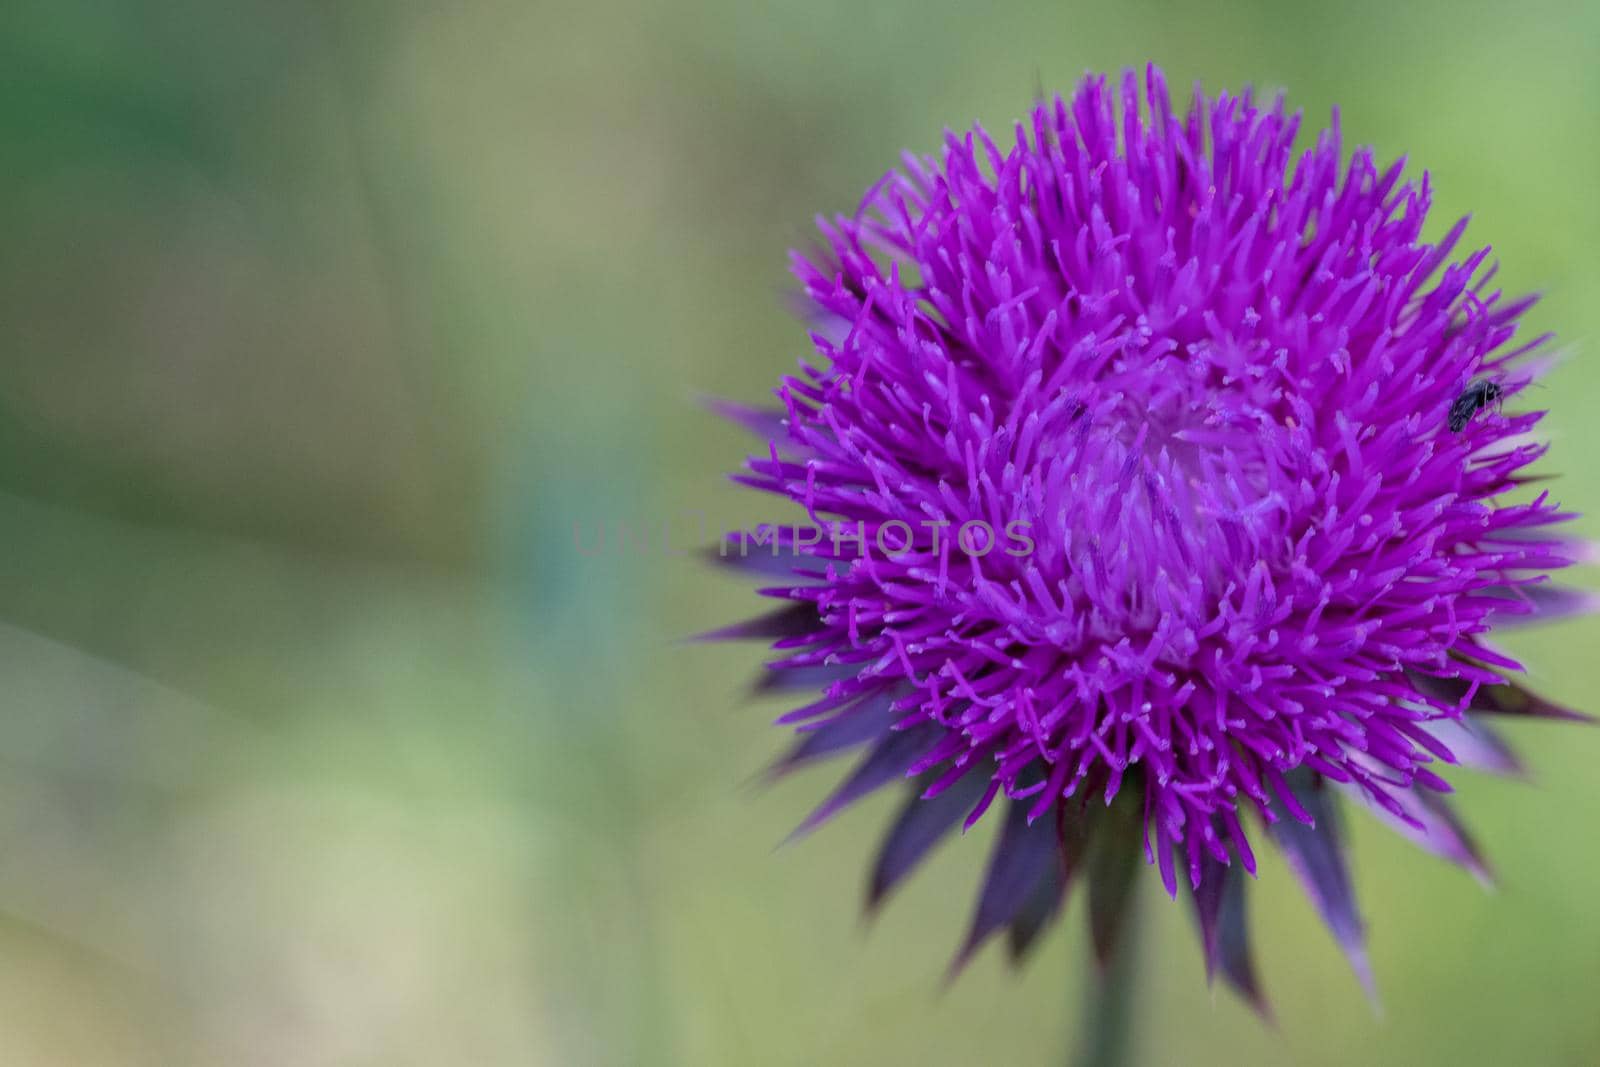 Scottish Flower Symbolic, Purple thistle close up in Nebraska landscape . High quality photo